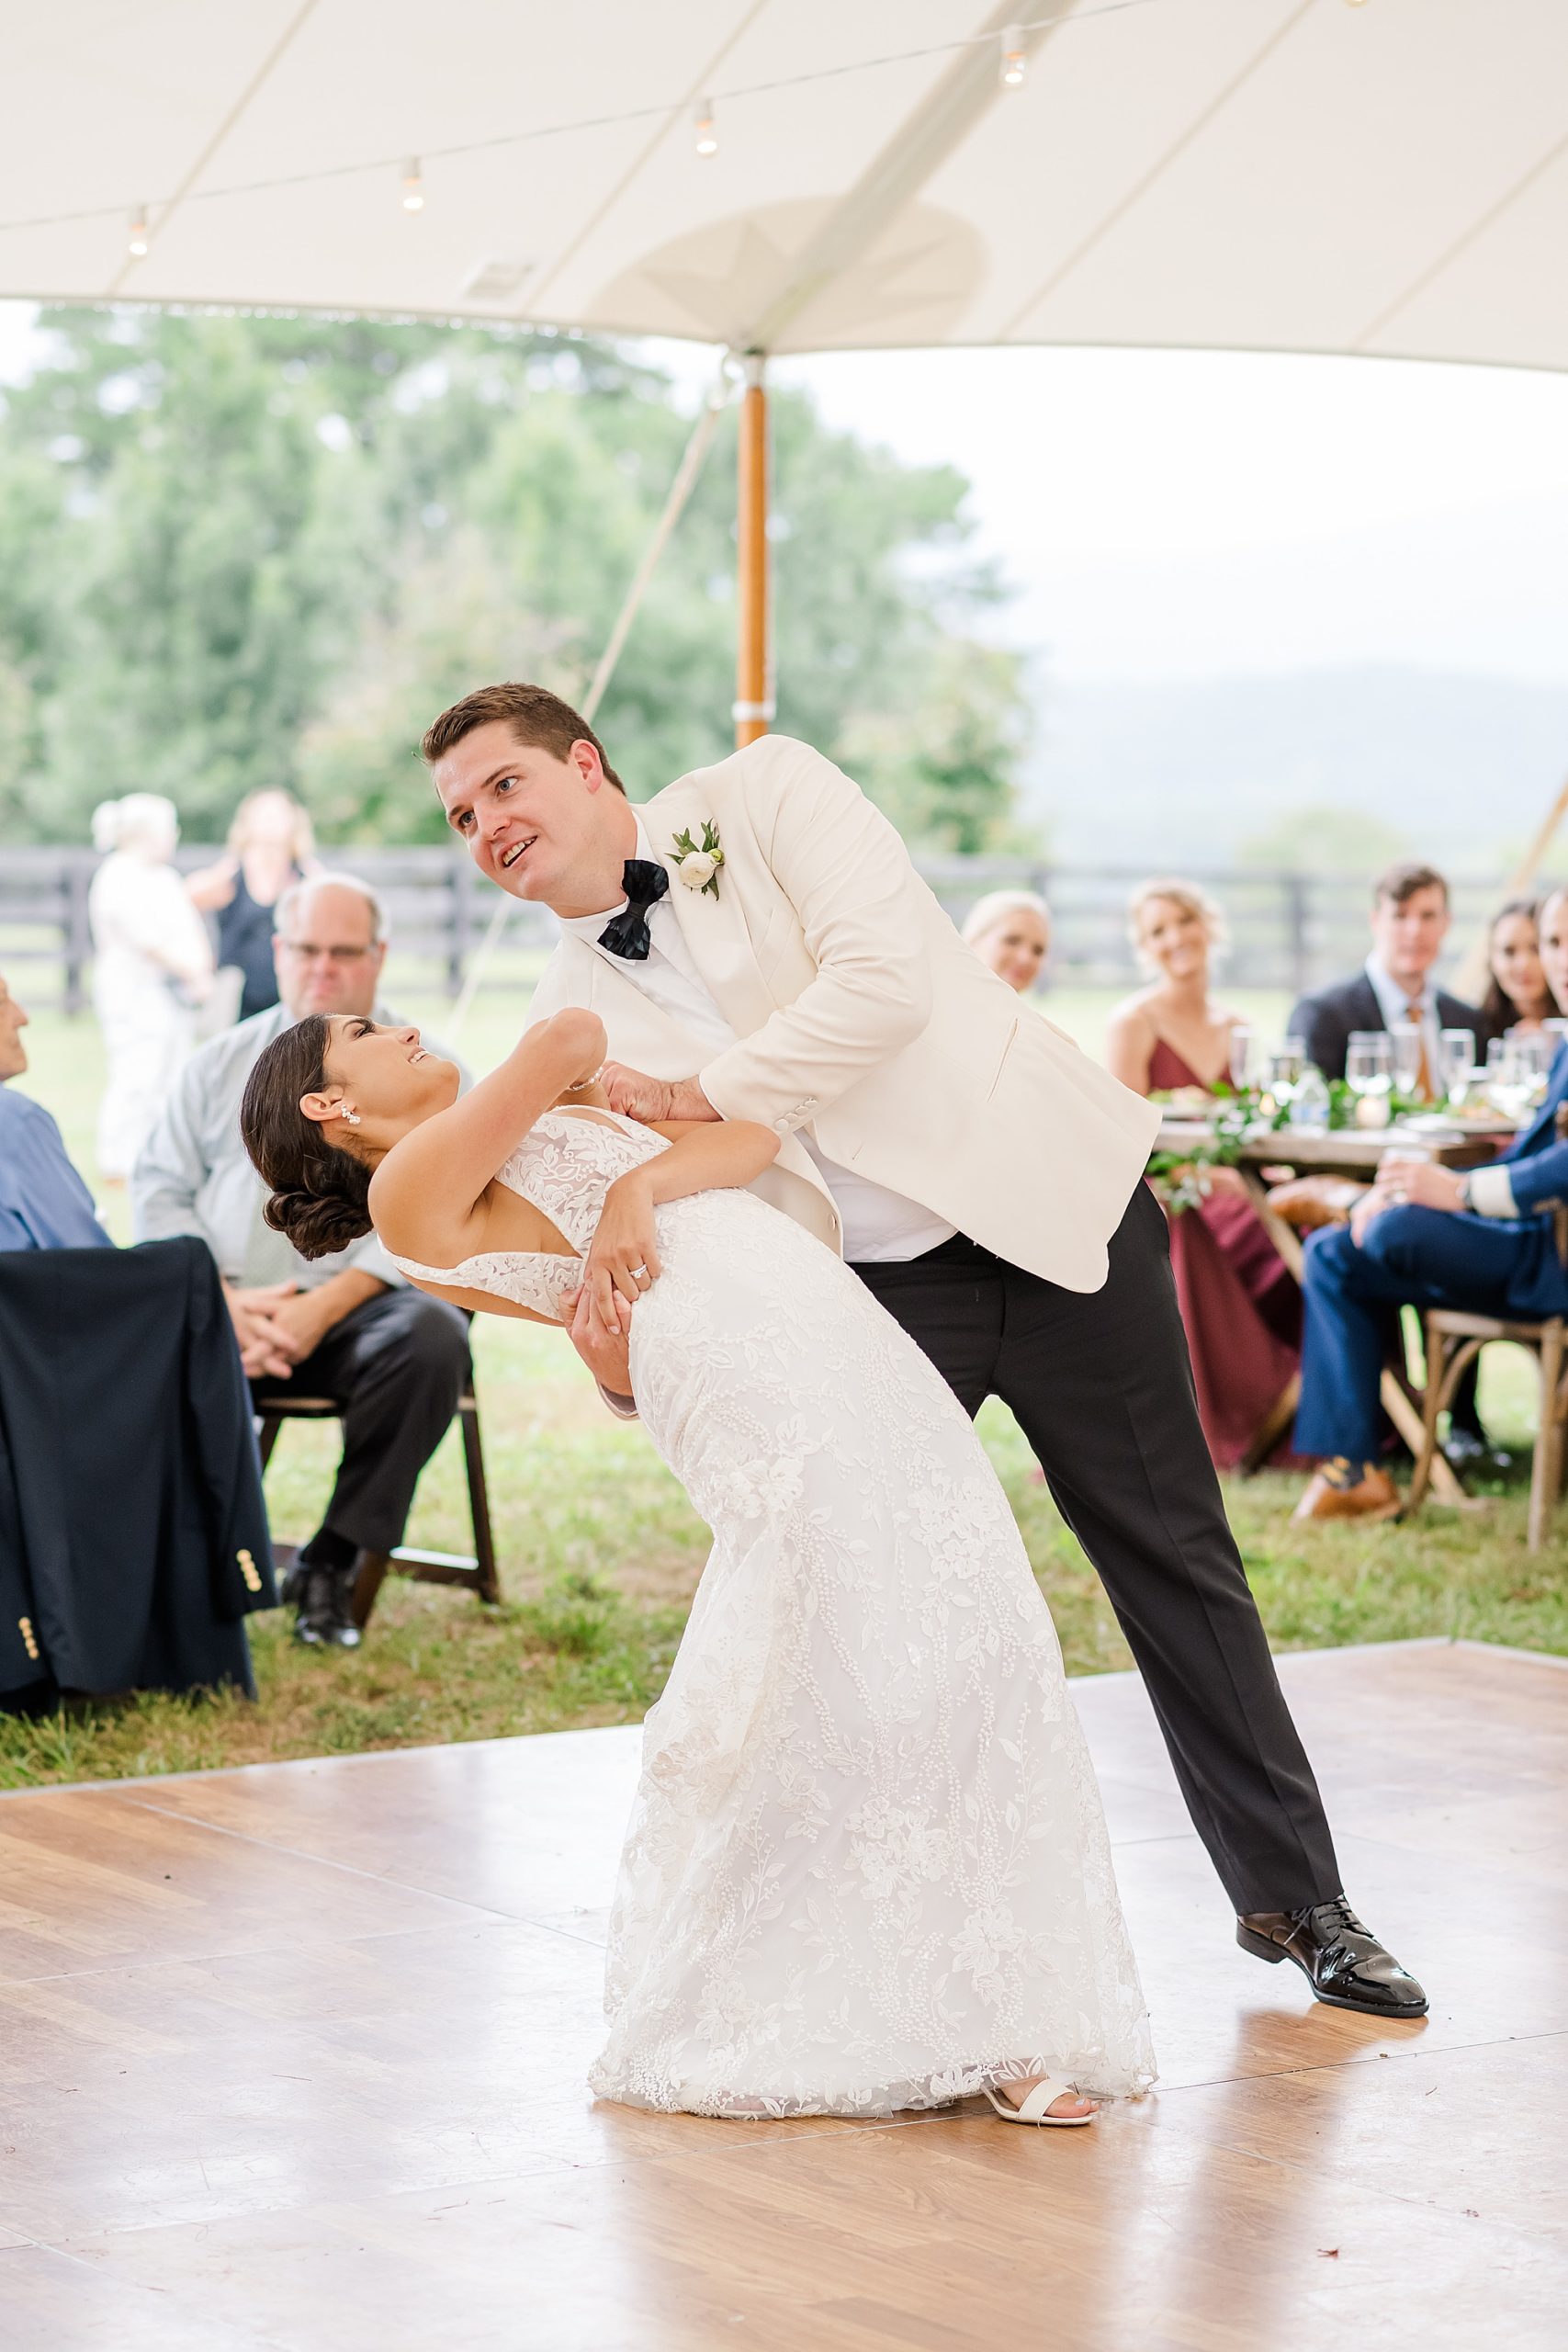 Bride and Groom First Dance at Mount Fair Farm Wedding Photographed by Virginia Wedding Photographer Kailey Brianna Photographer